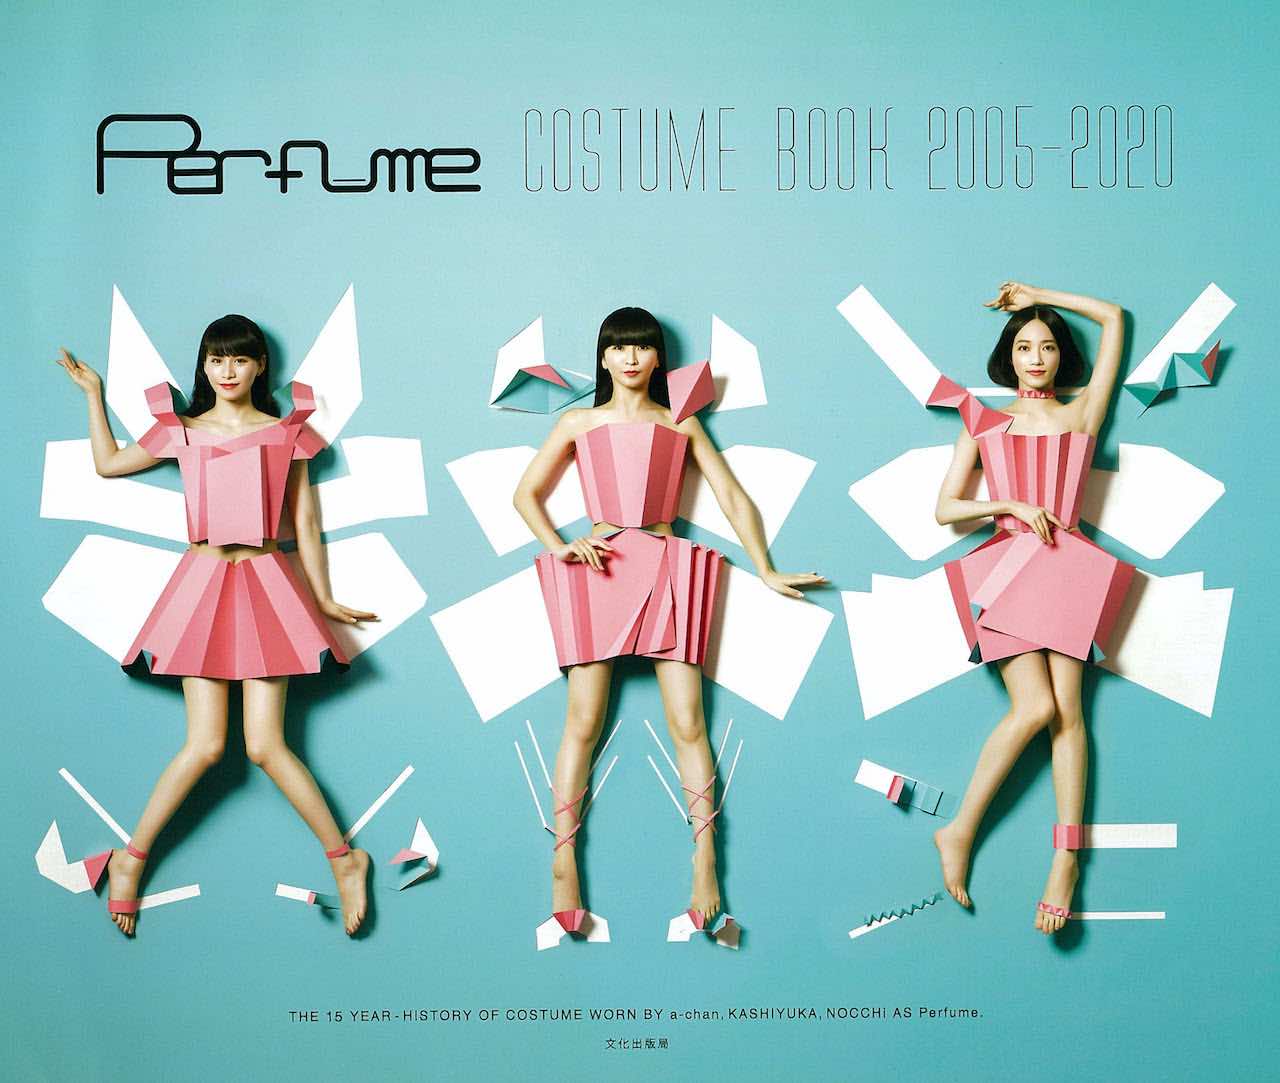 Perfume、初の衣装本『Perfume COSTUME BOOK 2005-2020』の発売が決定！